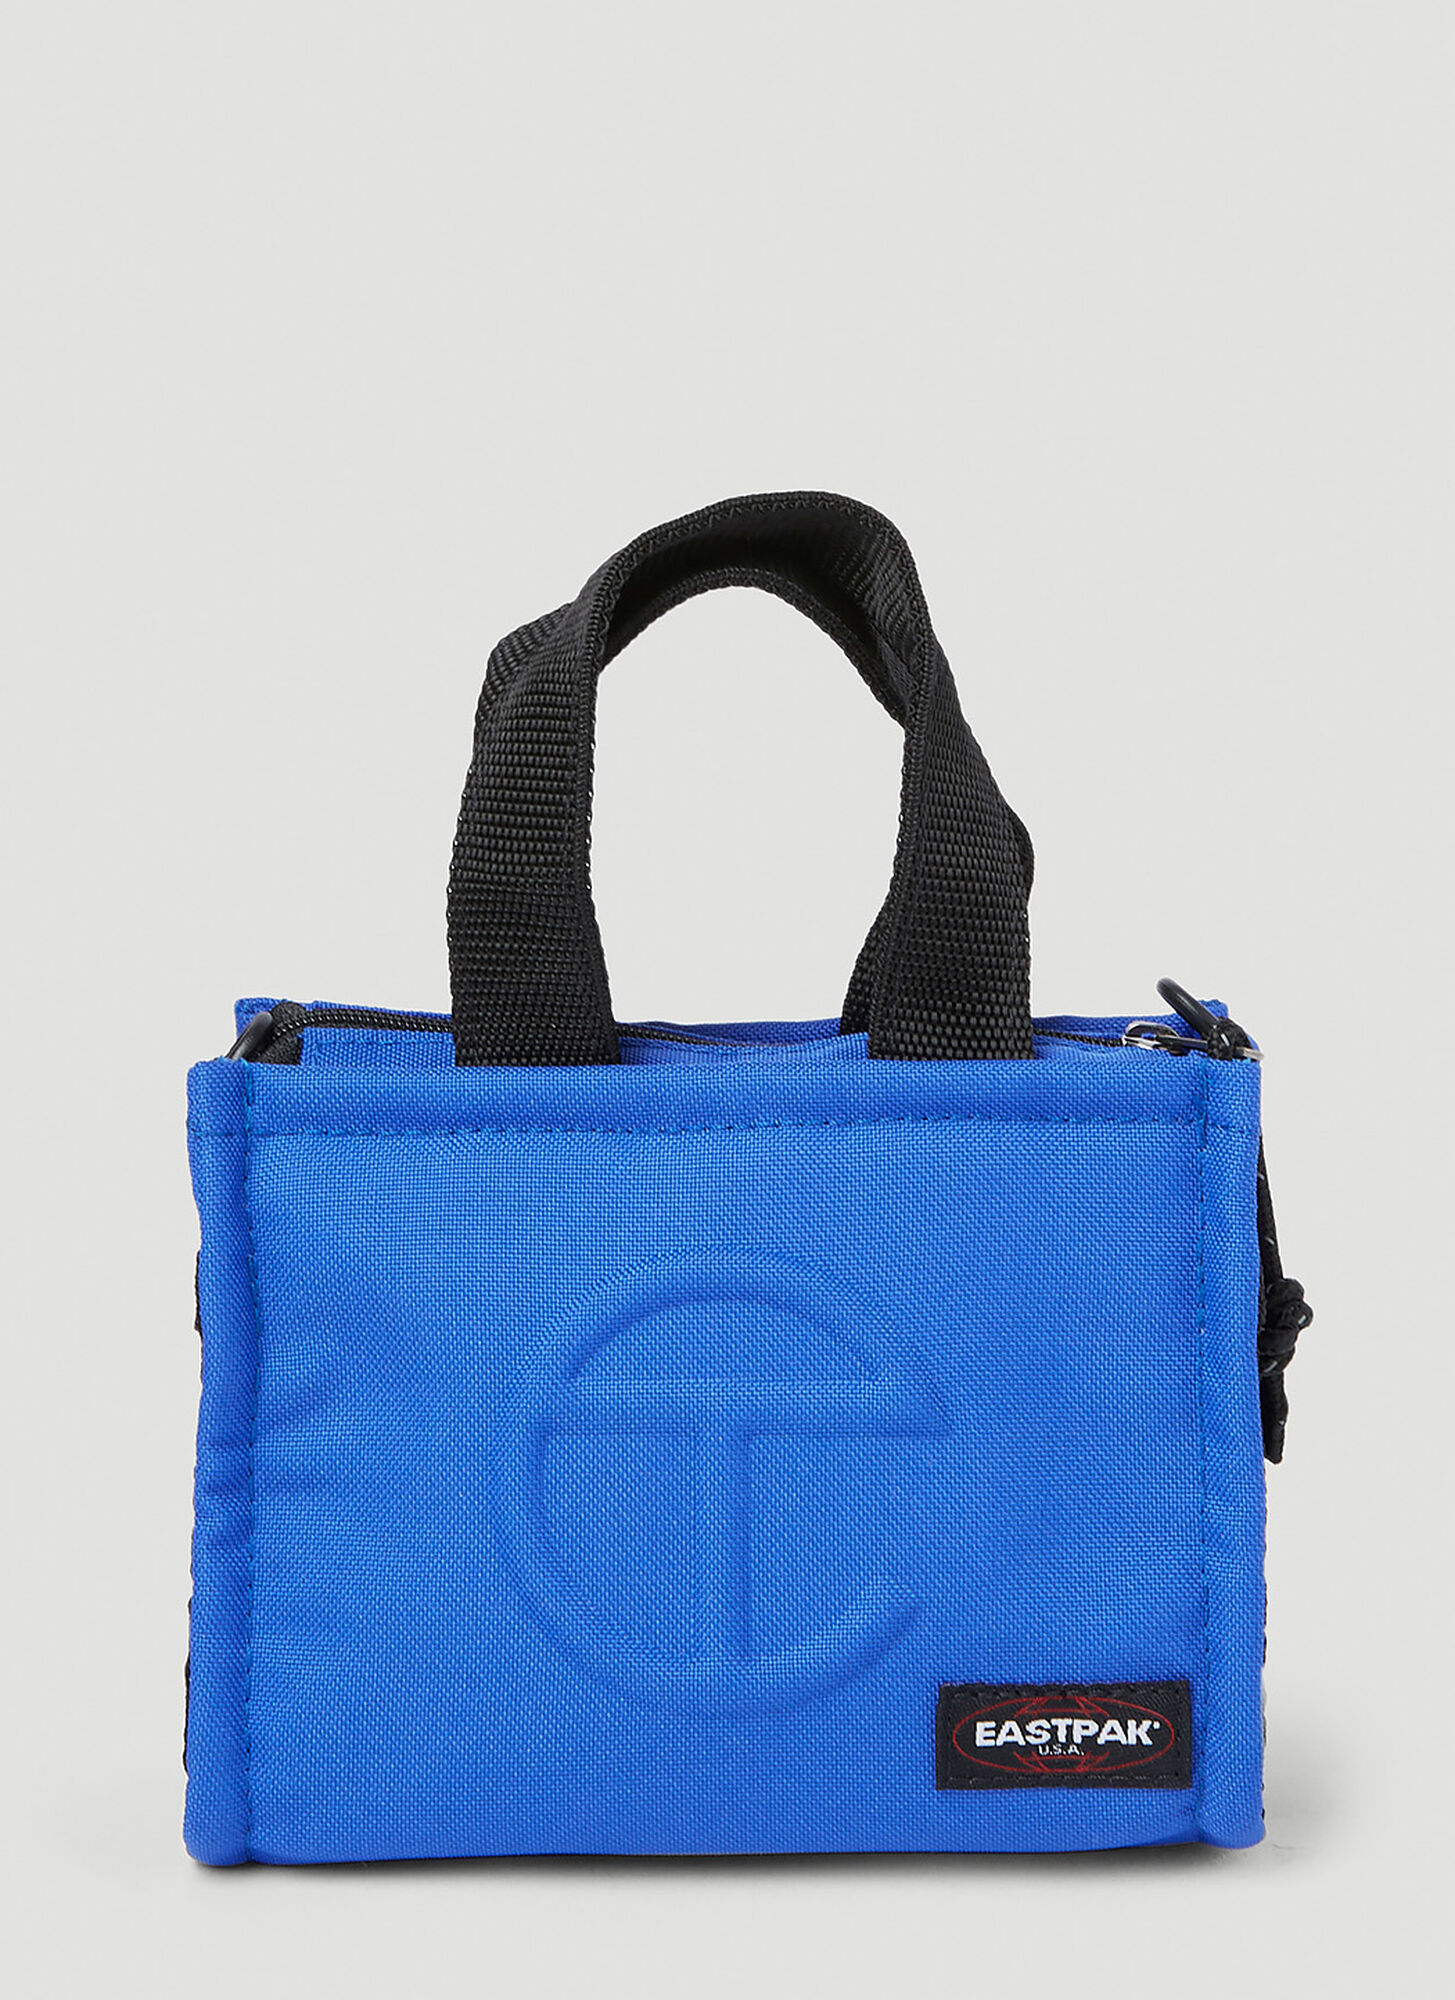 Eastpak X Telfar Shopper Convertible Small Tote Bag In Blue